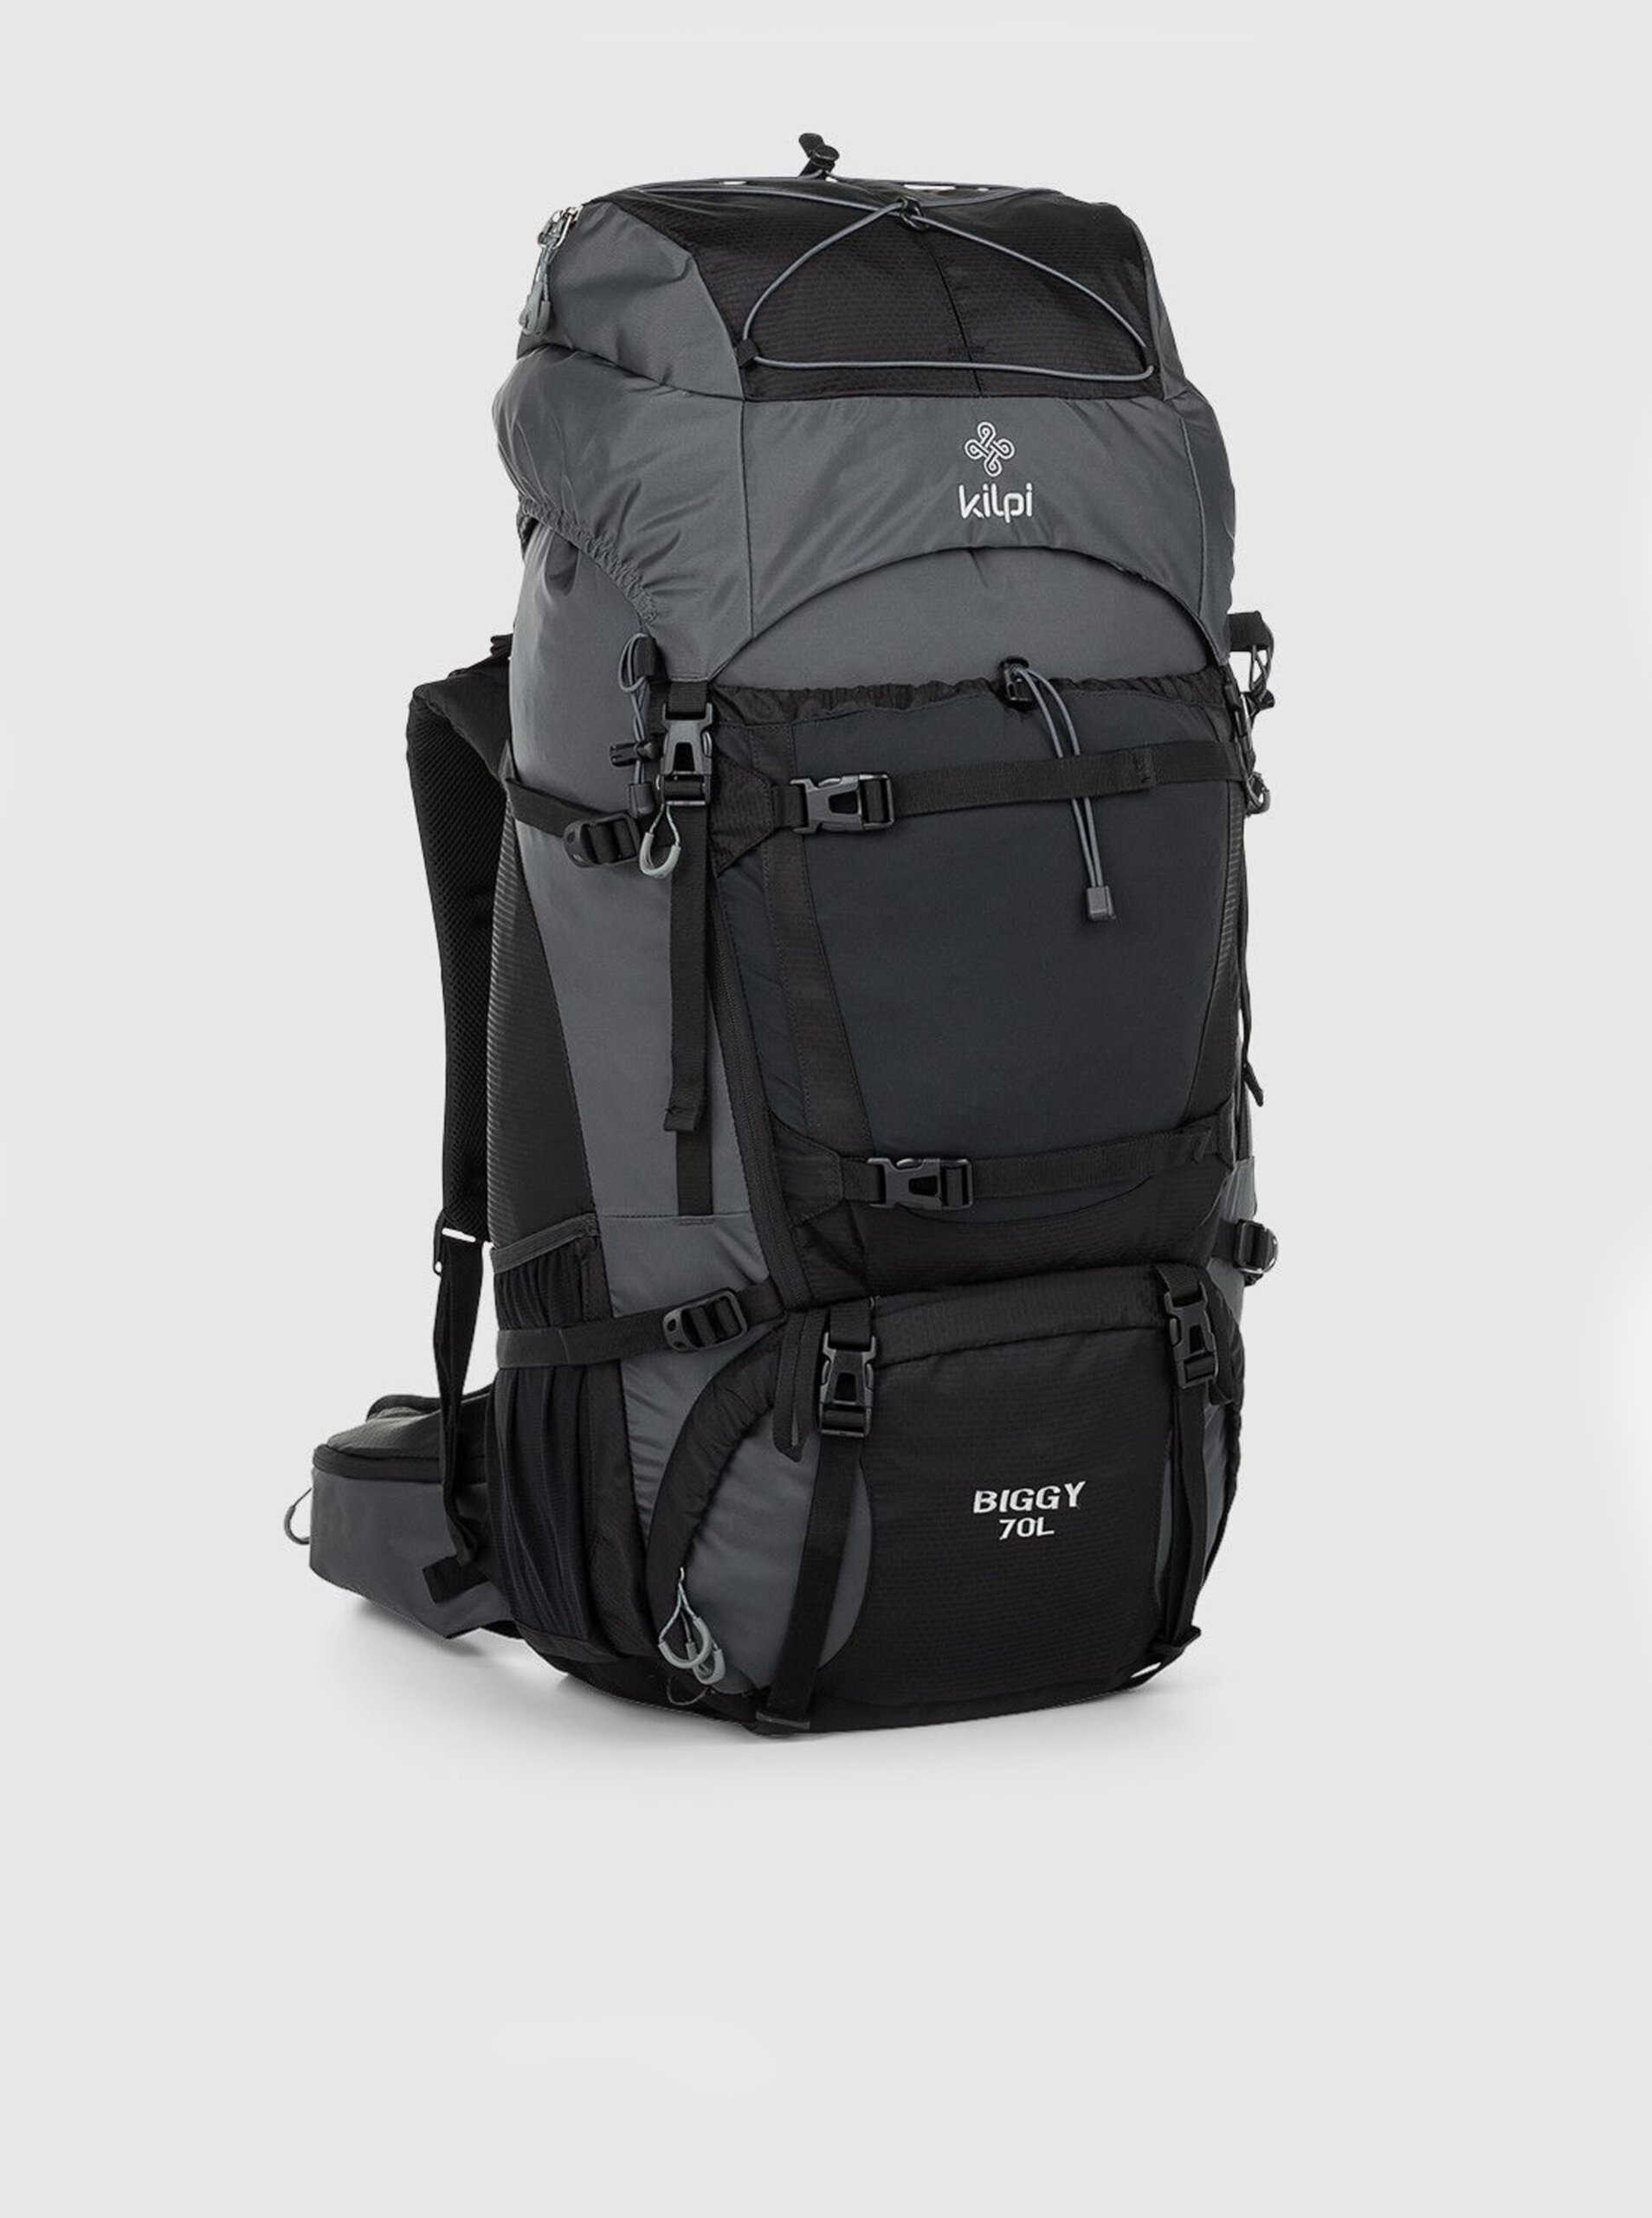 Lacno Šedo-čierny unisex športový ruksak Kilpi BIGGY (70 l)